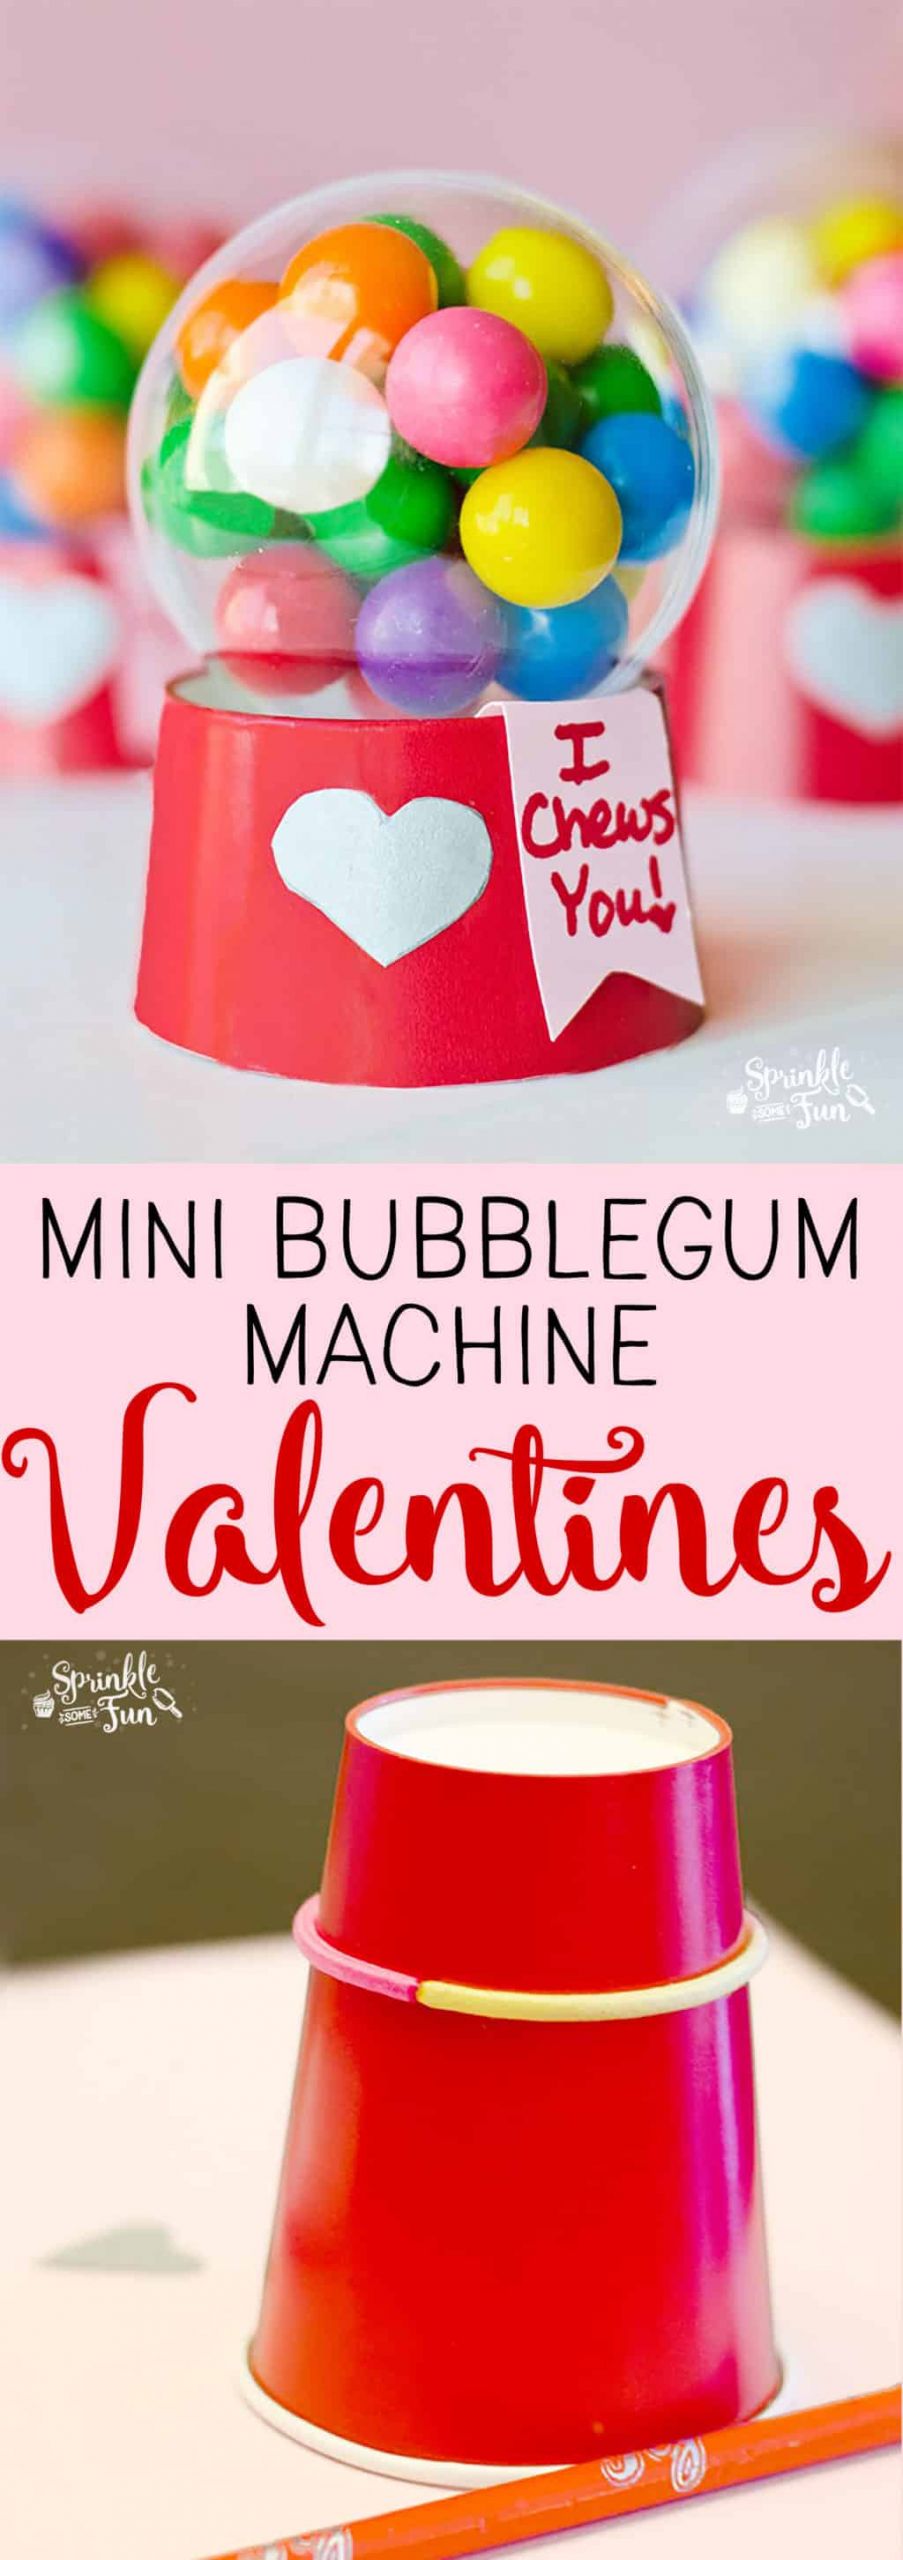 Valentines Gift Ideas For College Students
 Mini Bubblegum Machine Valentines